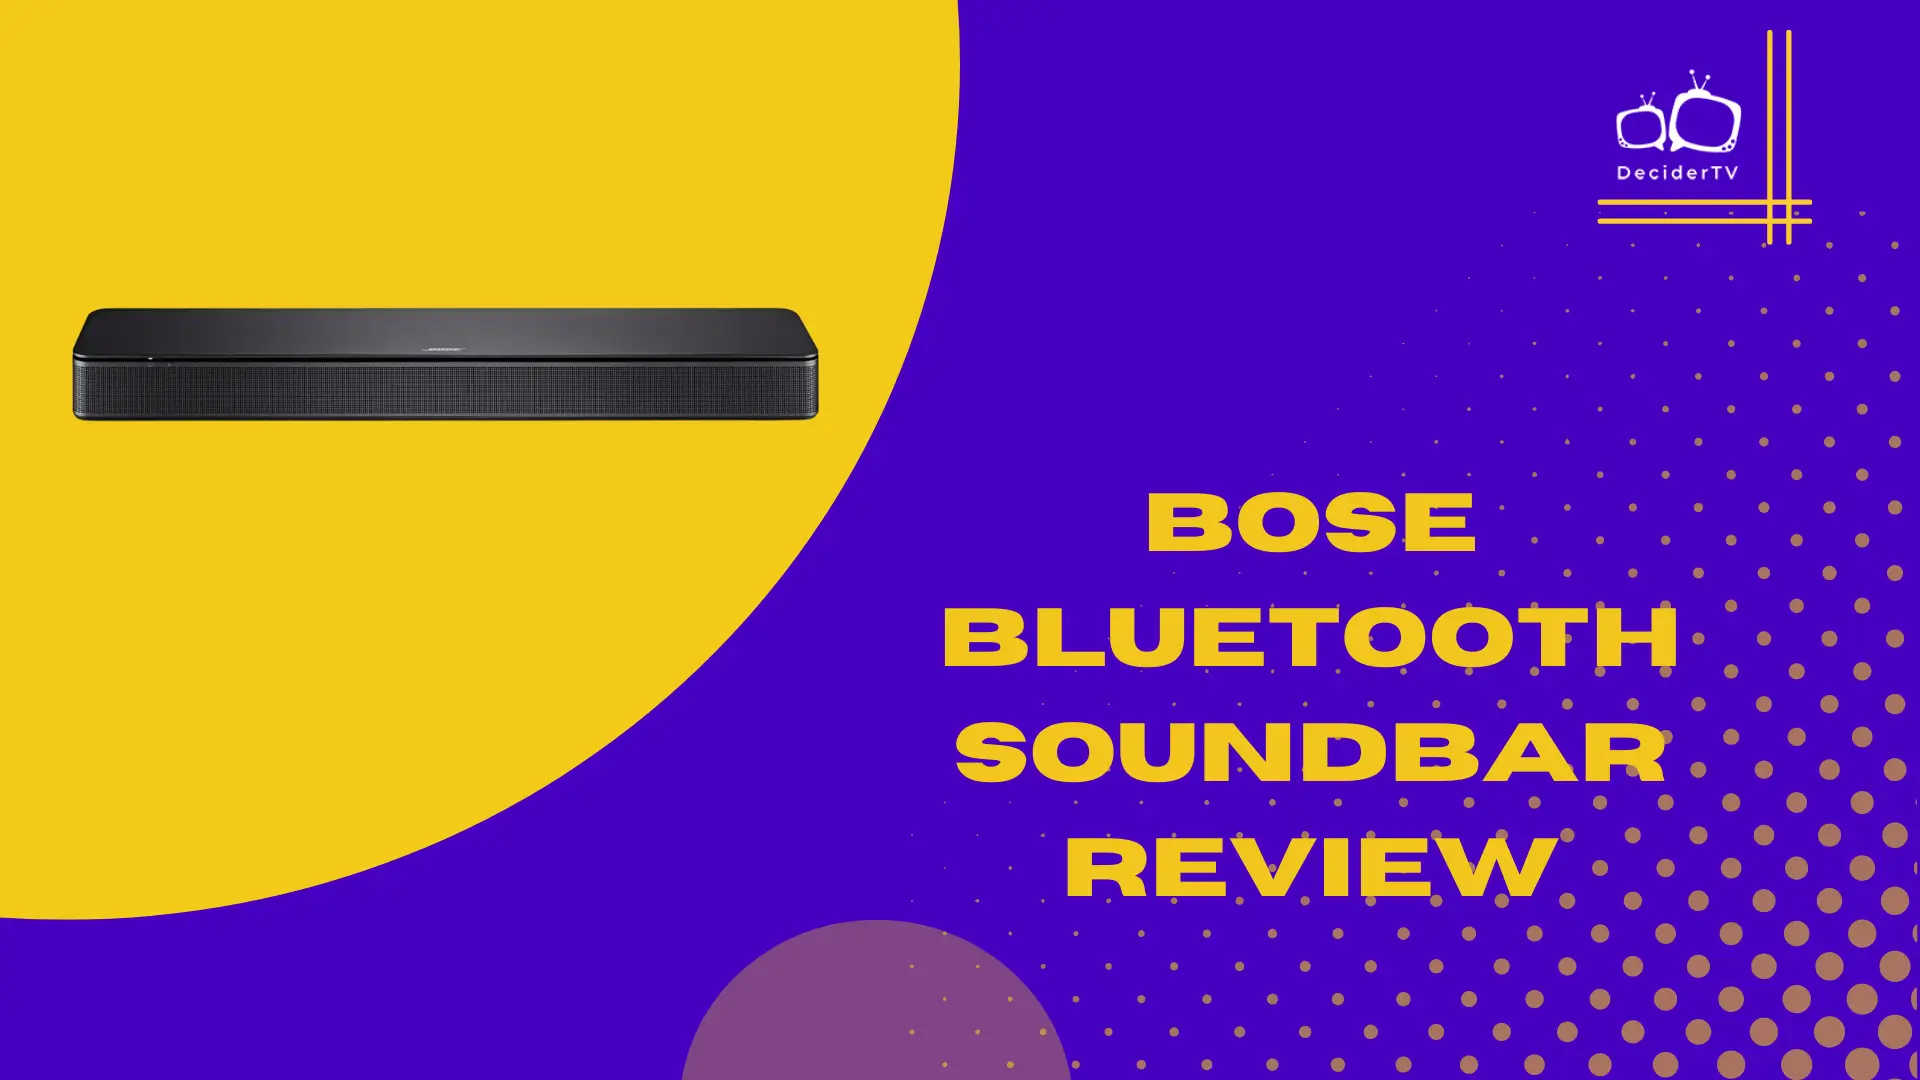 Bose Bluetooth Soundbar